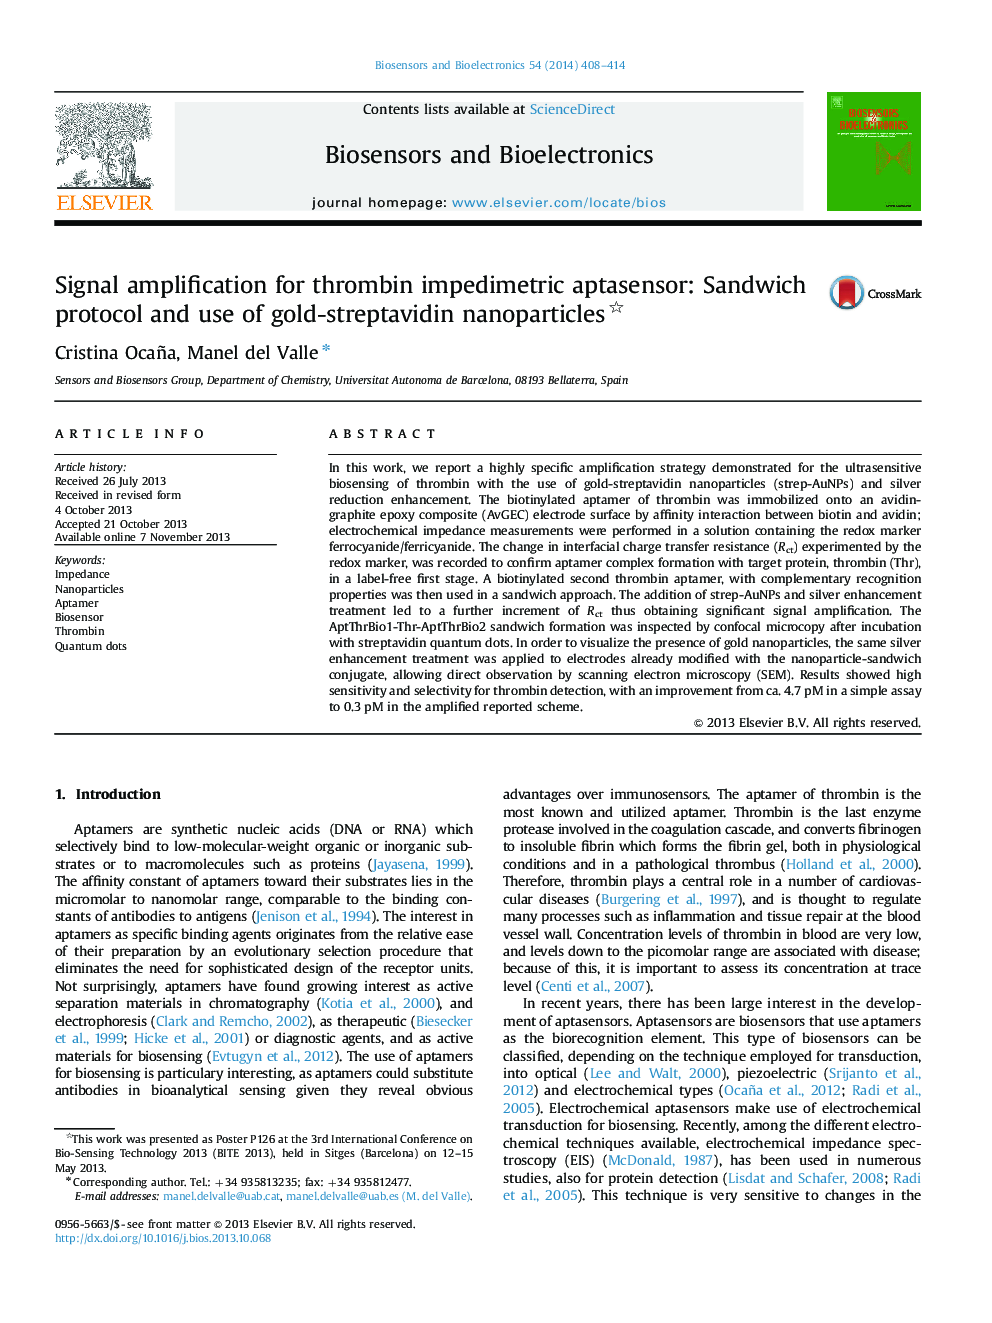 Signal amplification for thrombin impedimetric aptasensor: Sandwich protocol and use of gold-streptavidin nanoparticles